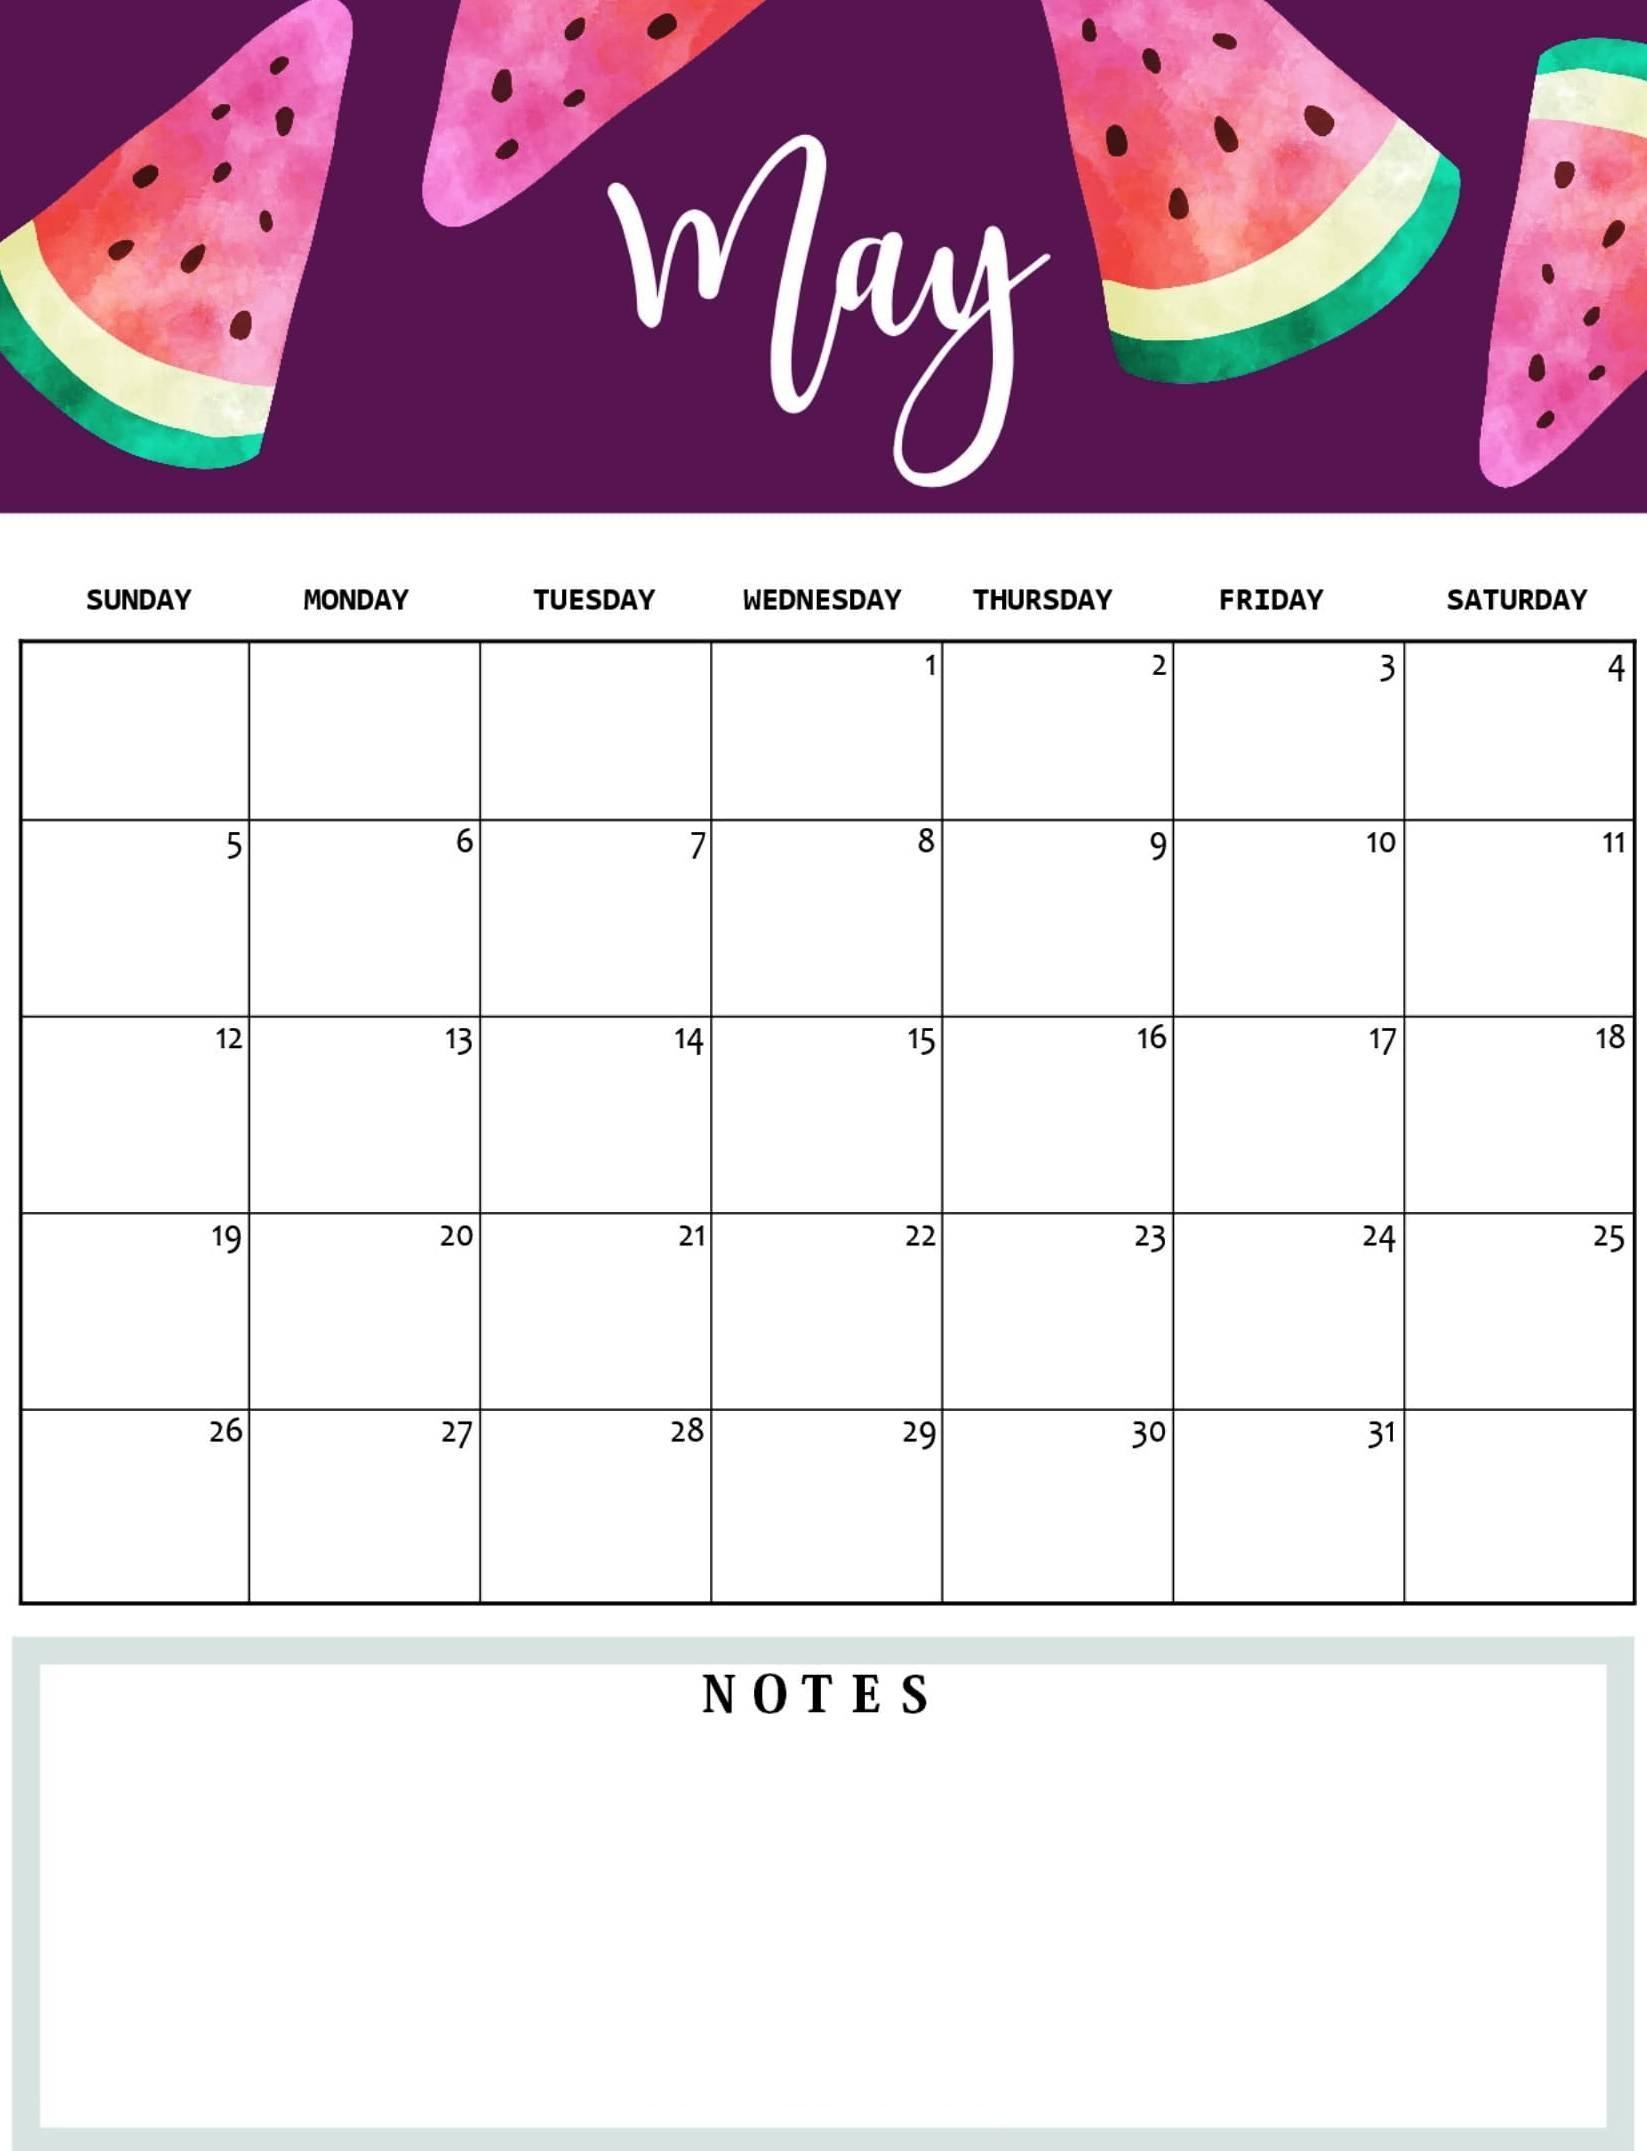 Cute May 2019 Calendar Wallpaper Floral Image Wall Designs